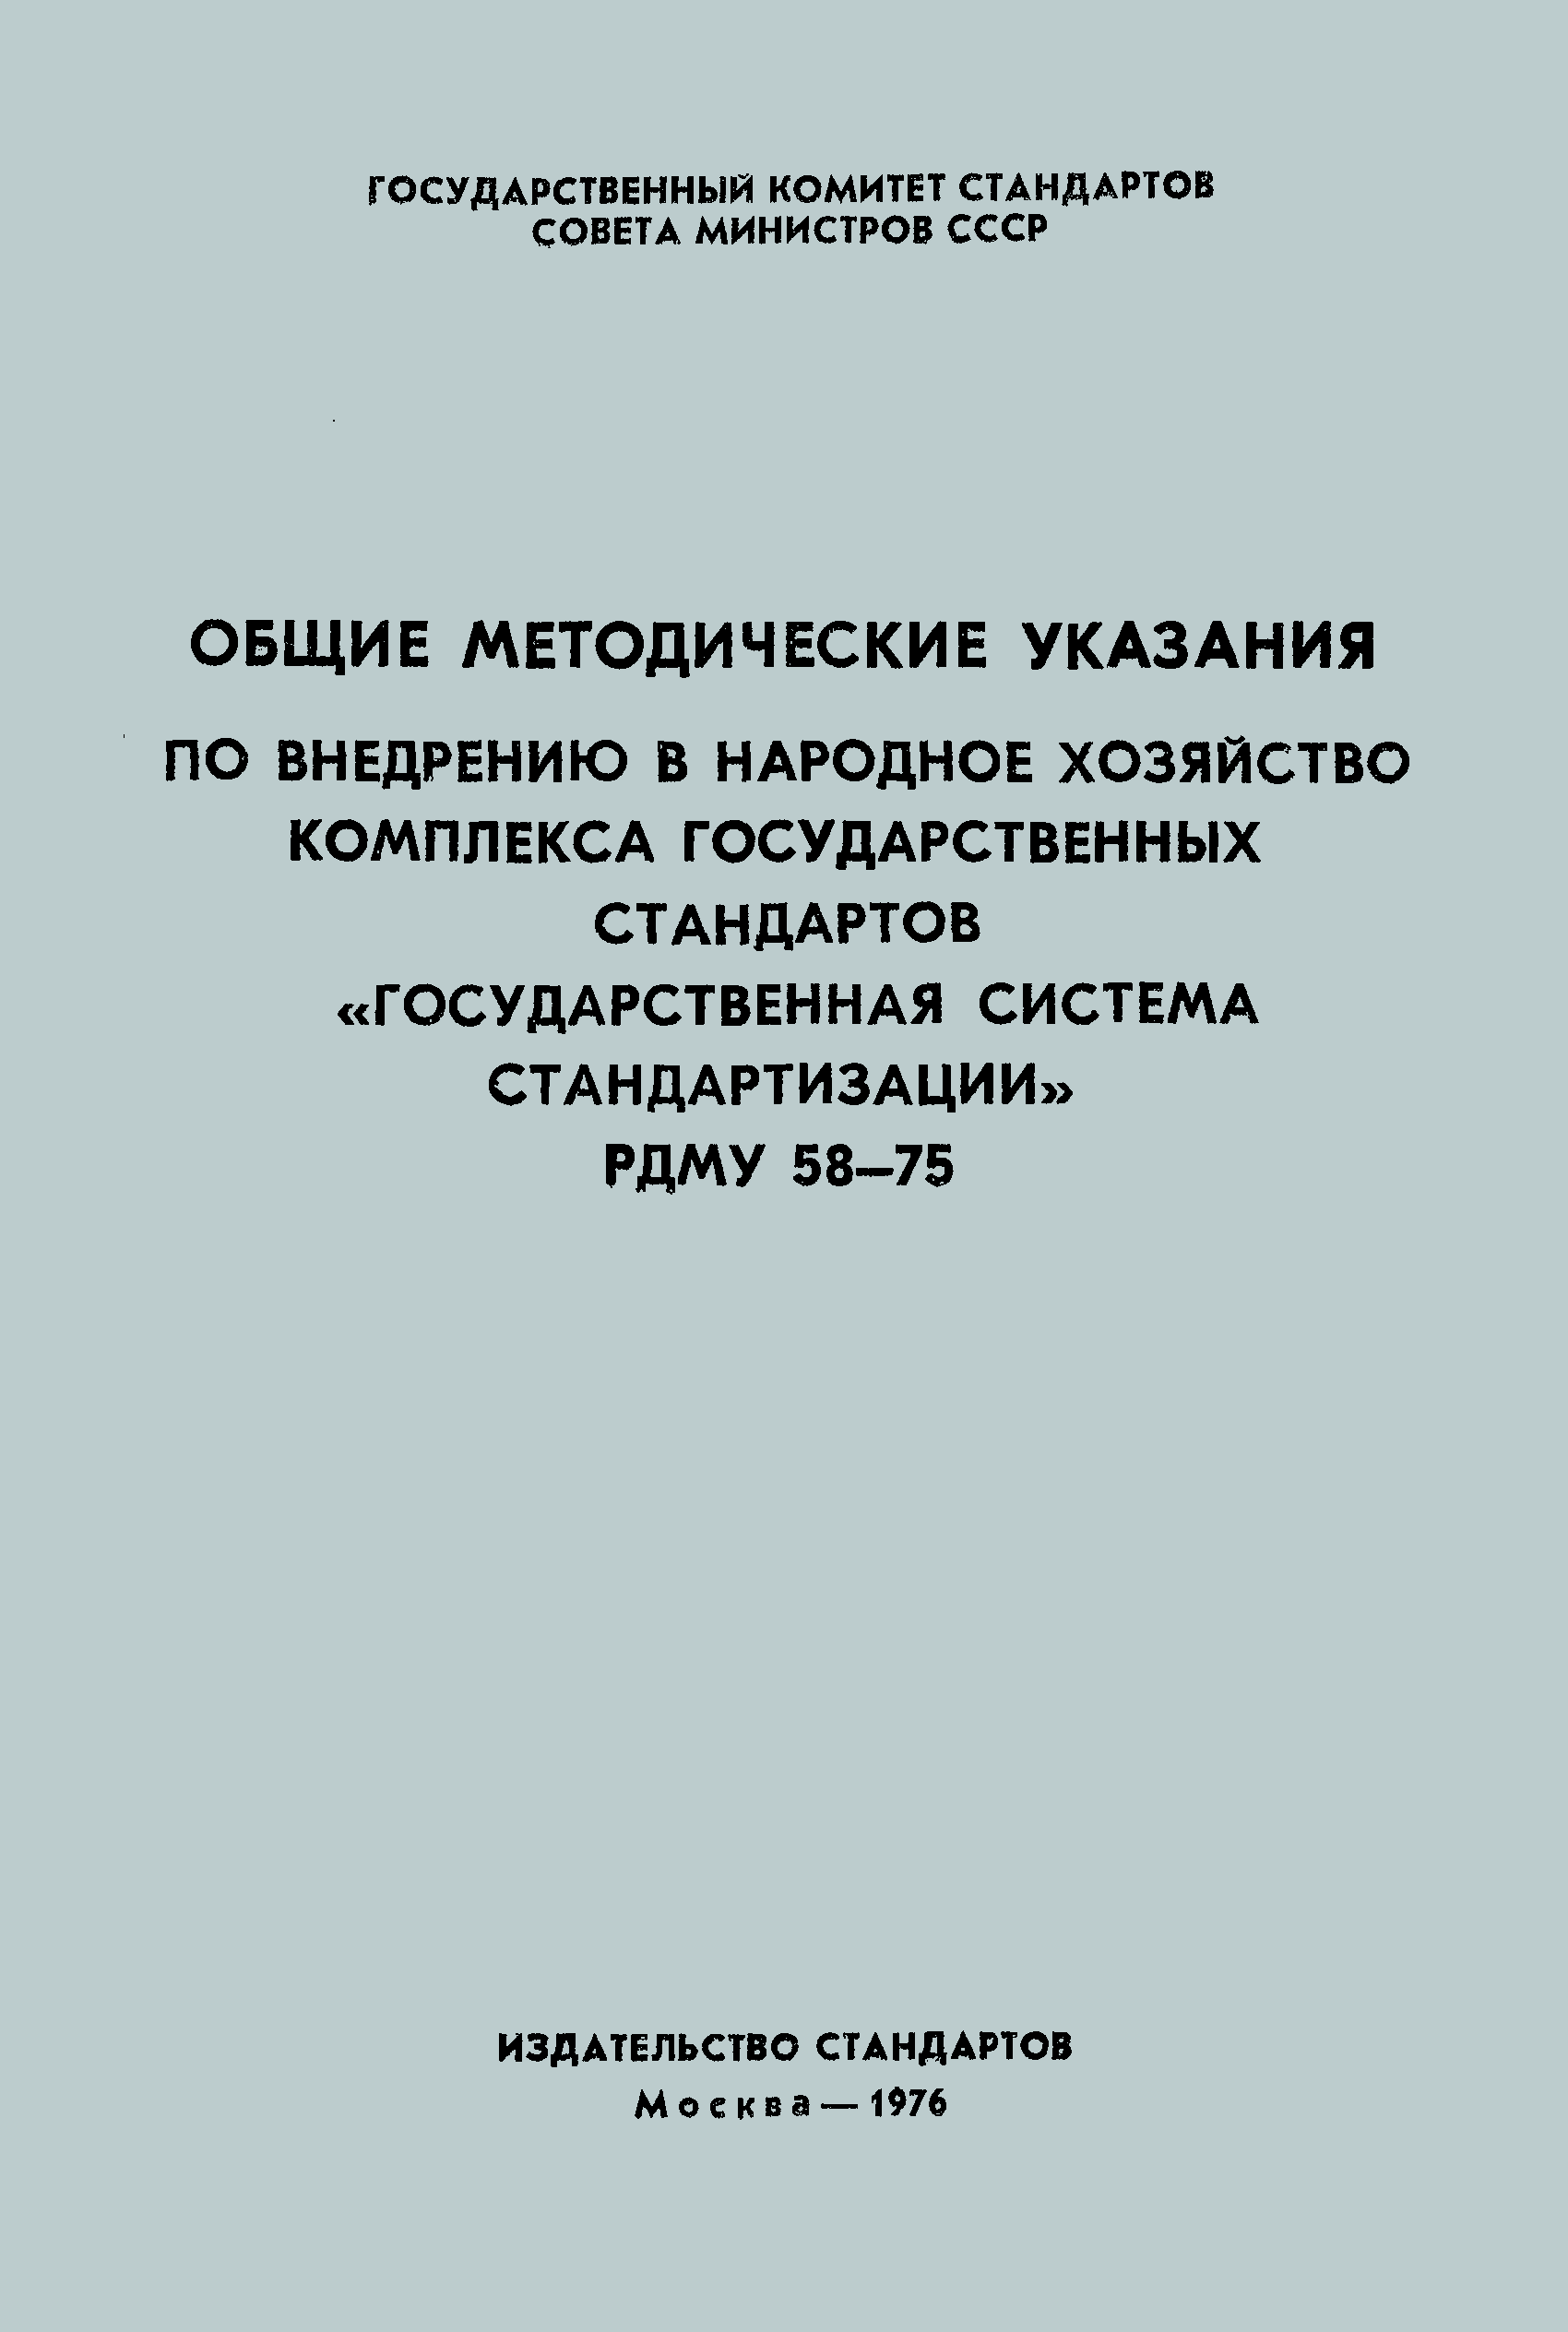 РДМУ 58-75